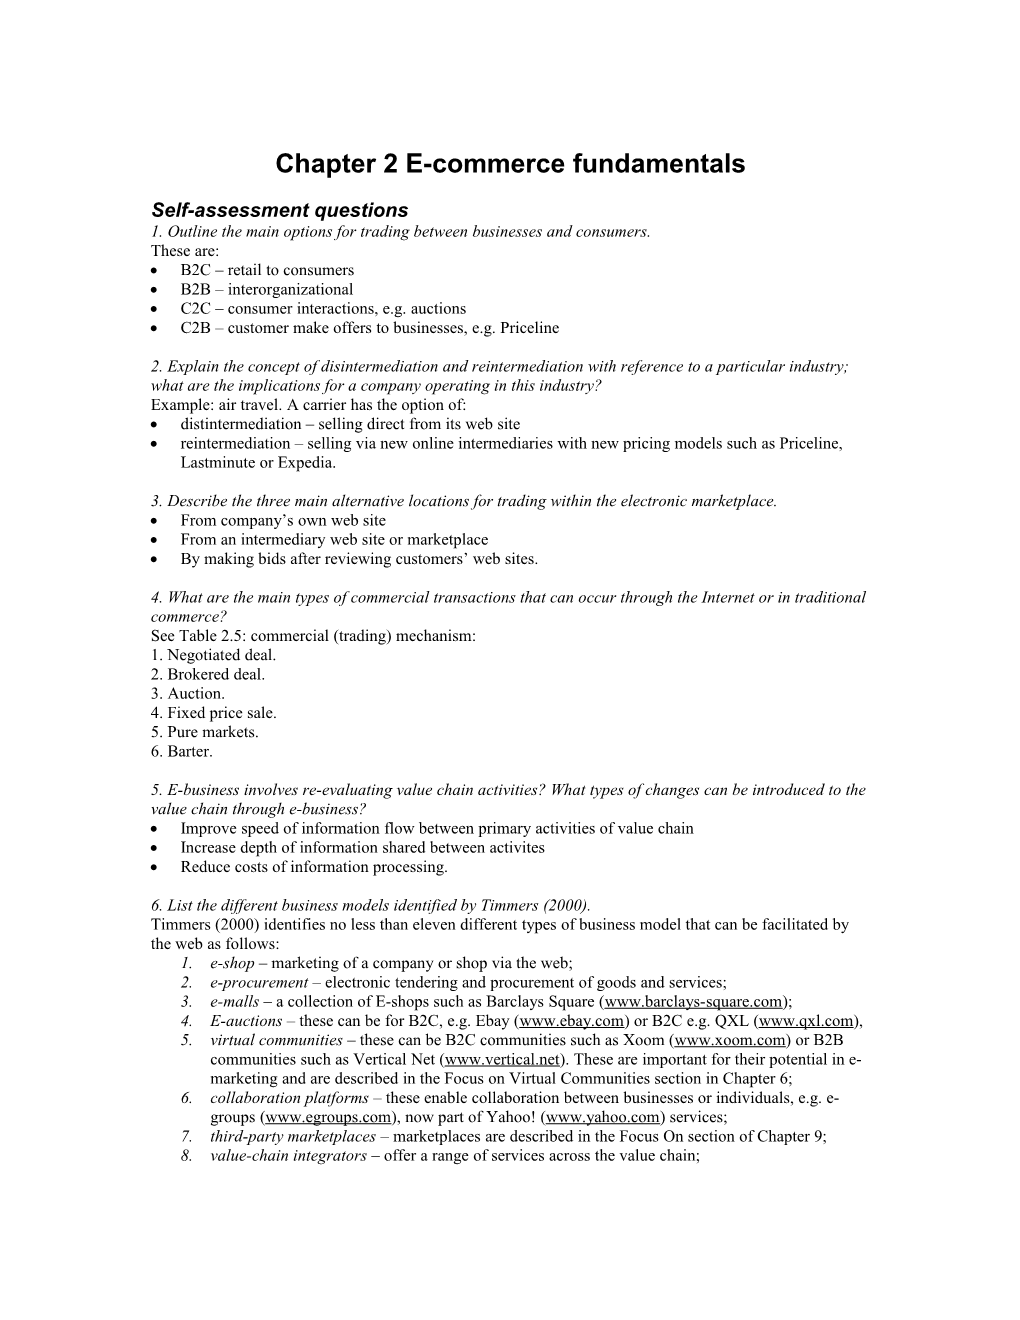 Chapter 2 E-Commerce Fundamentals